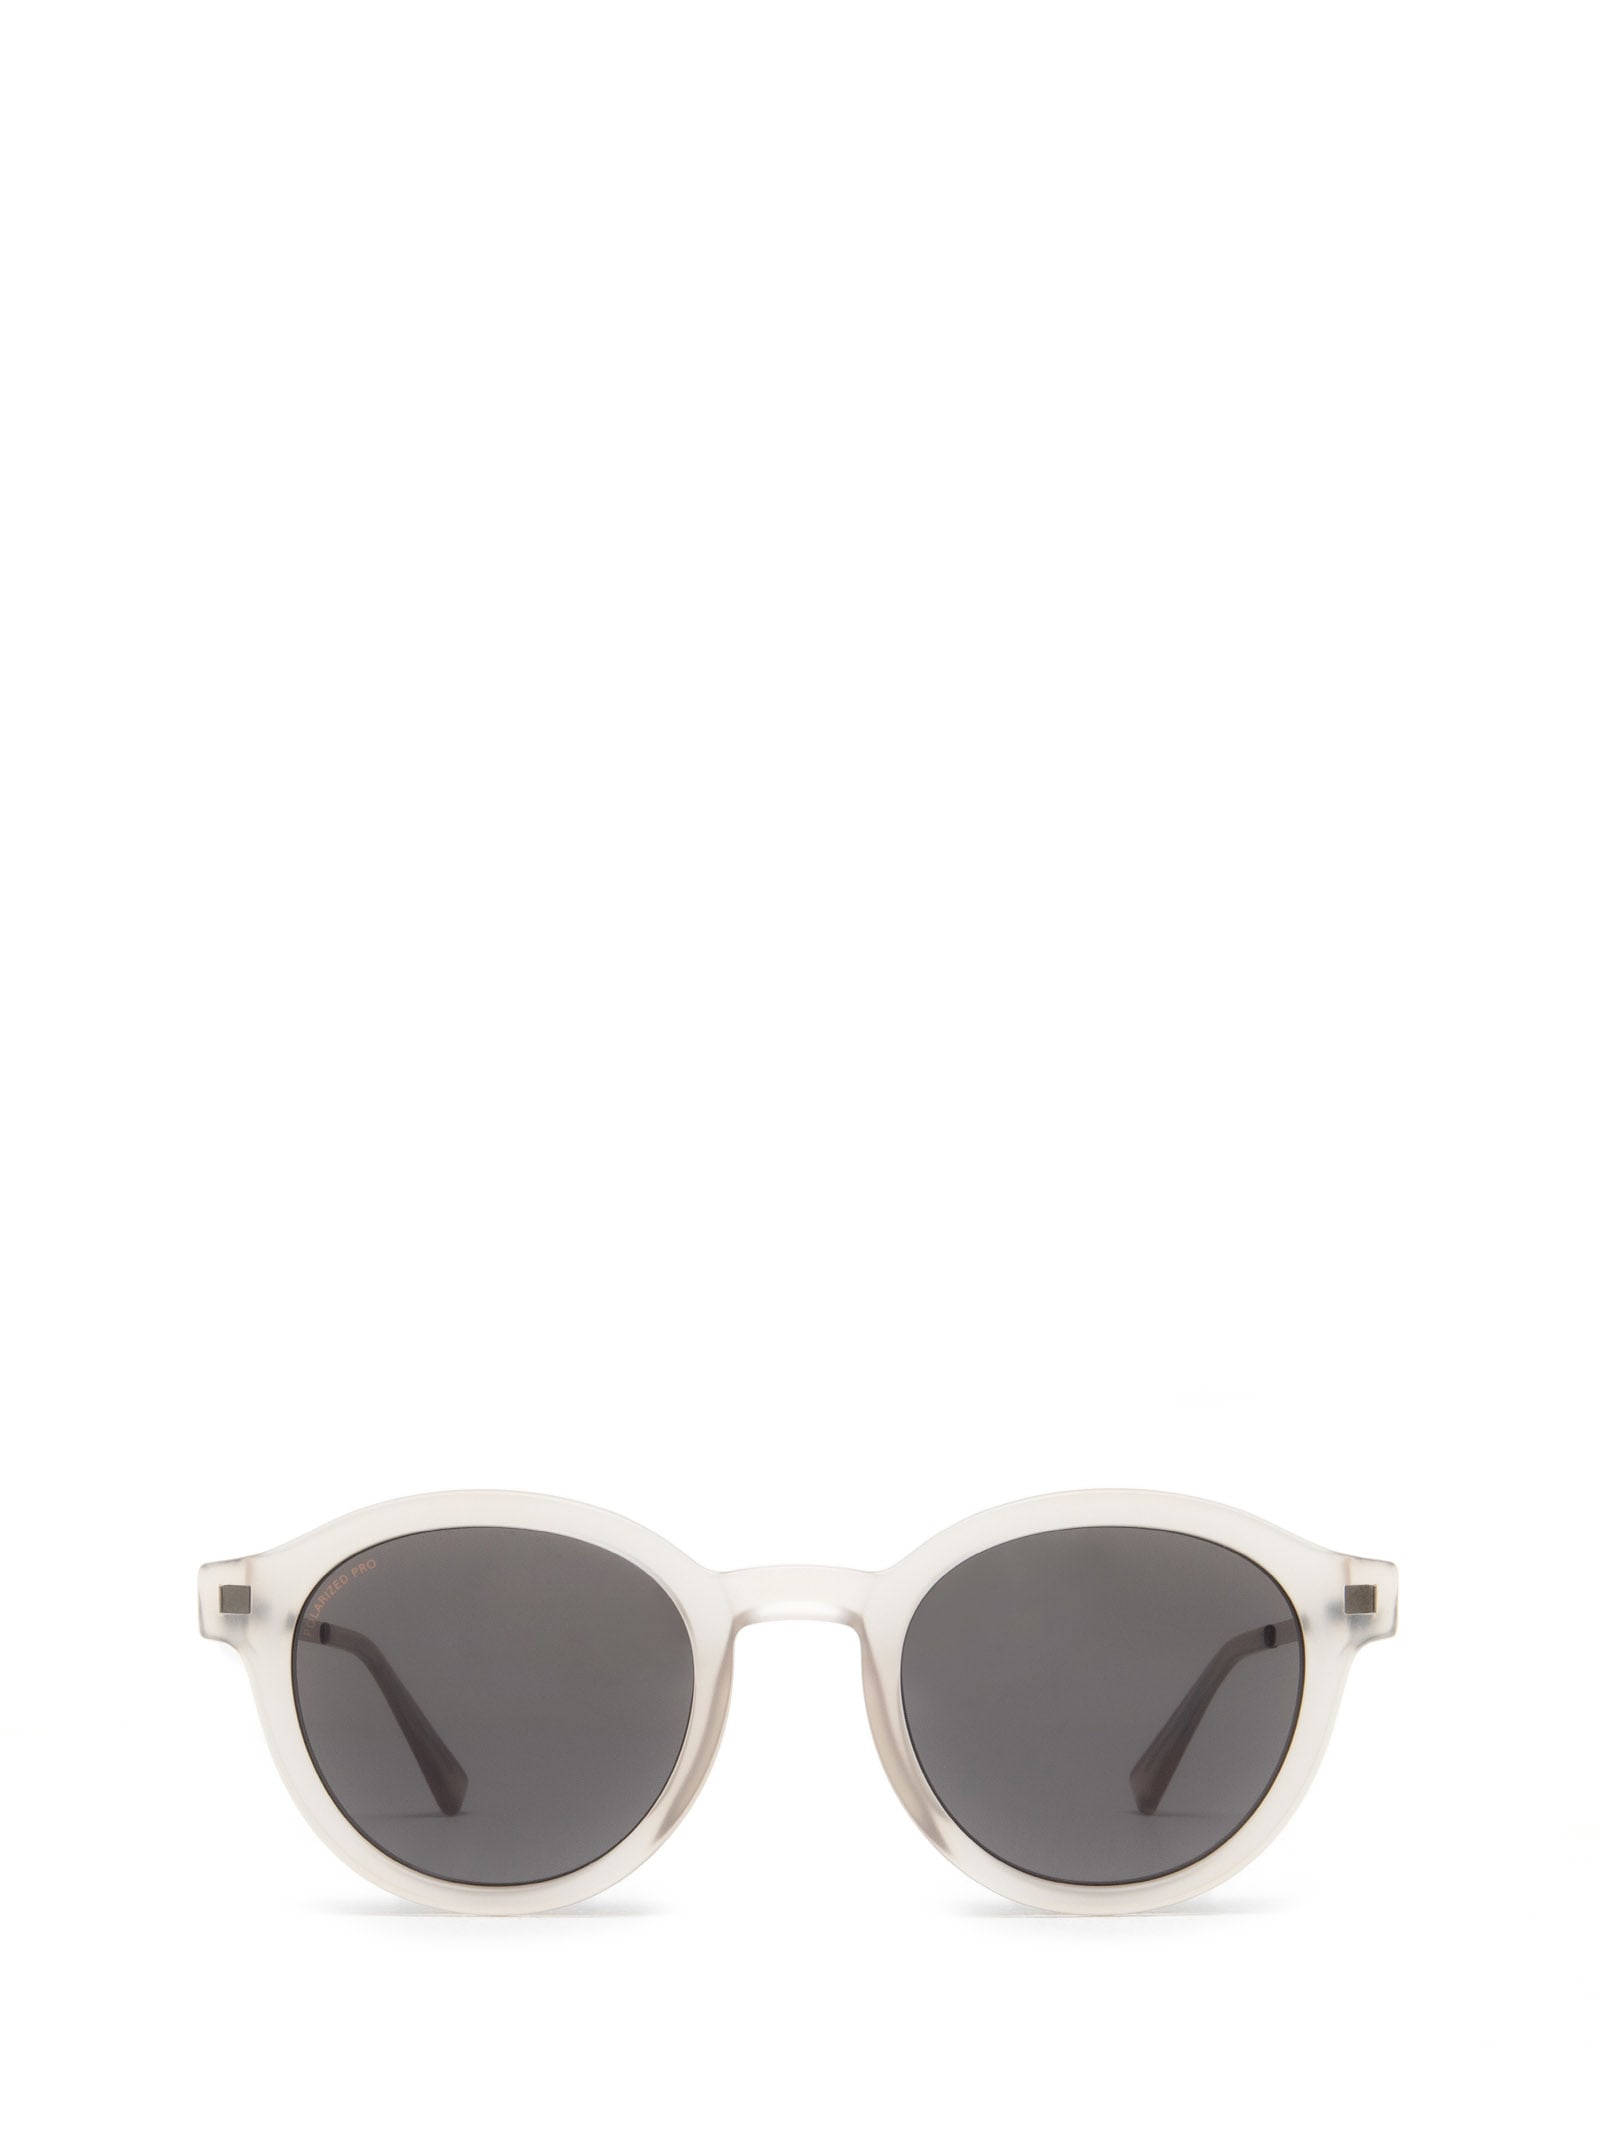 Mykita Ketill Sun C185 Matte Champagne/shiny Gra Sunglasses